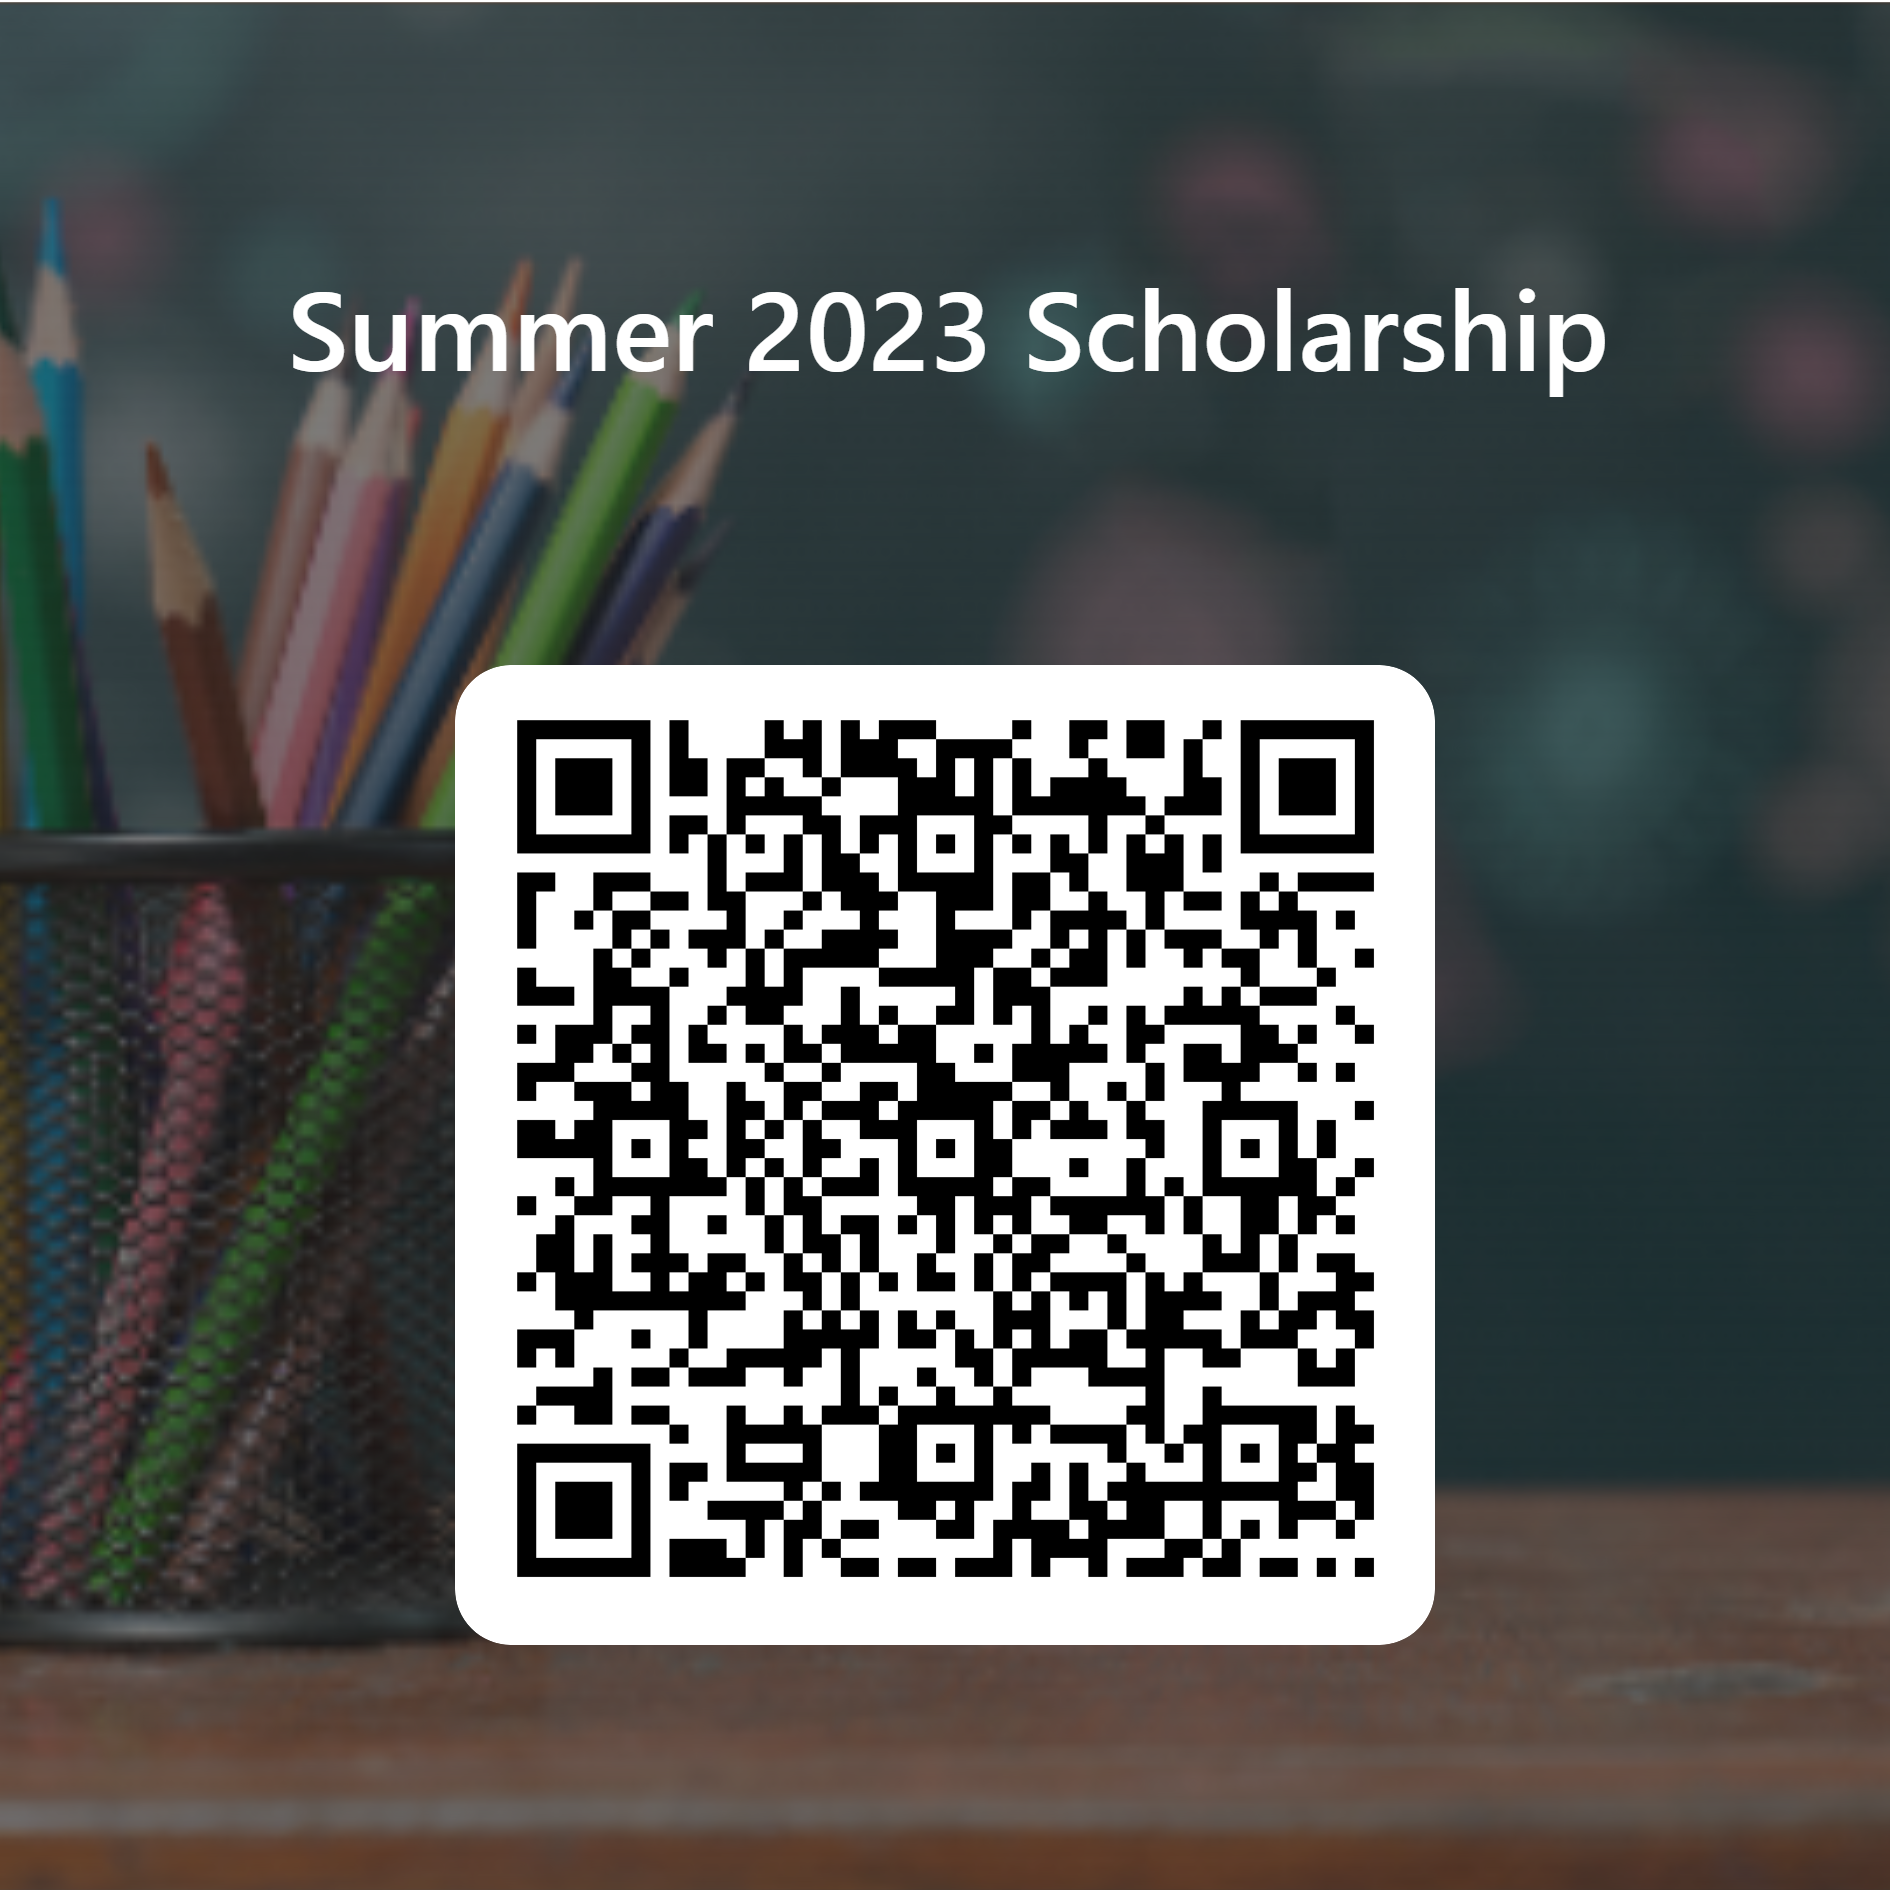 QRCode Summer 2023 Scholarship